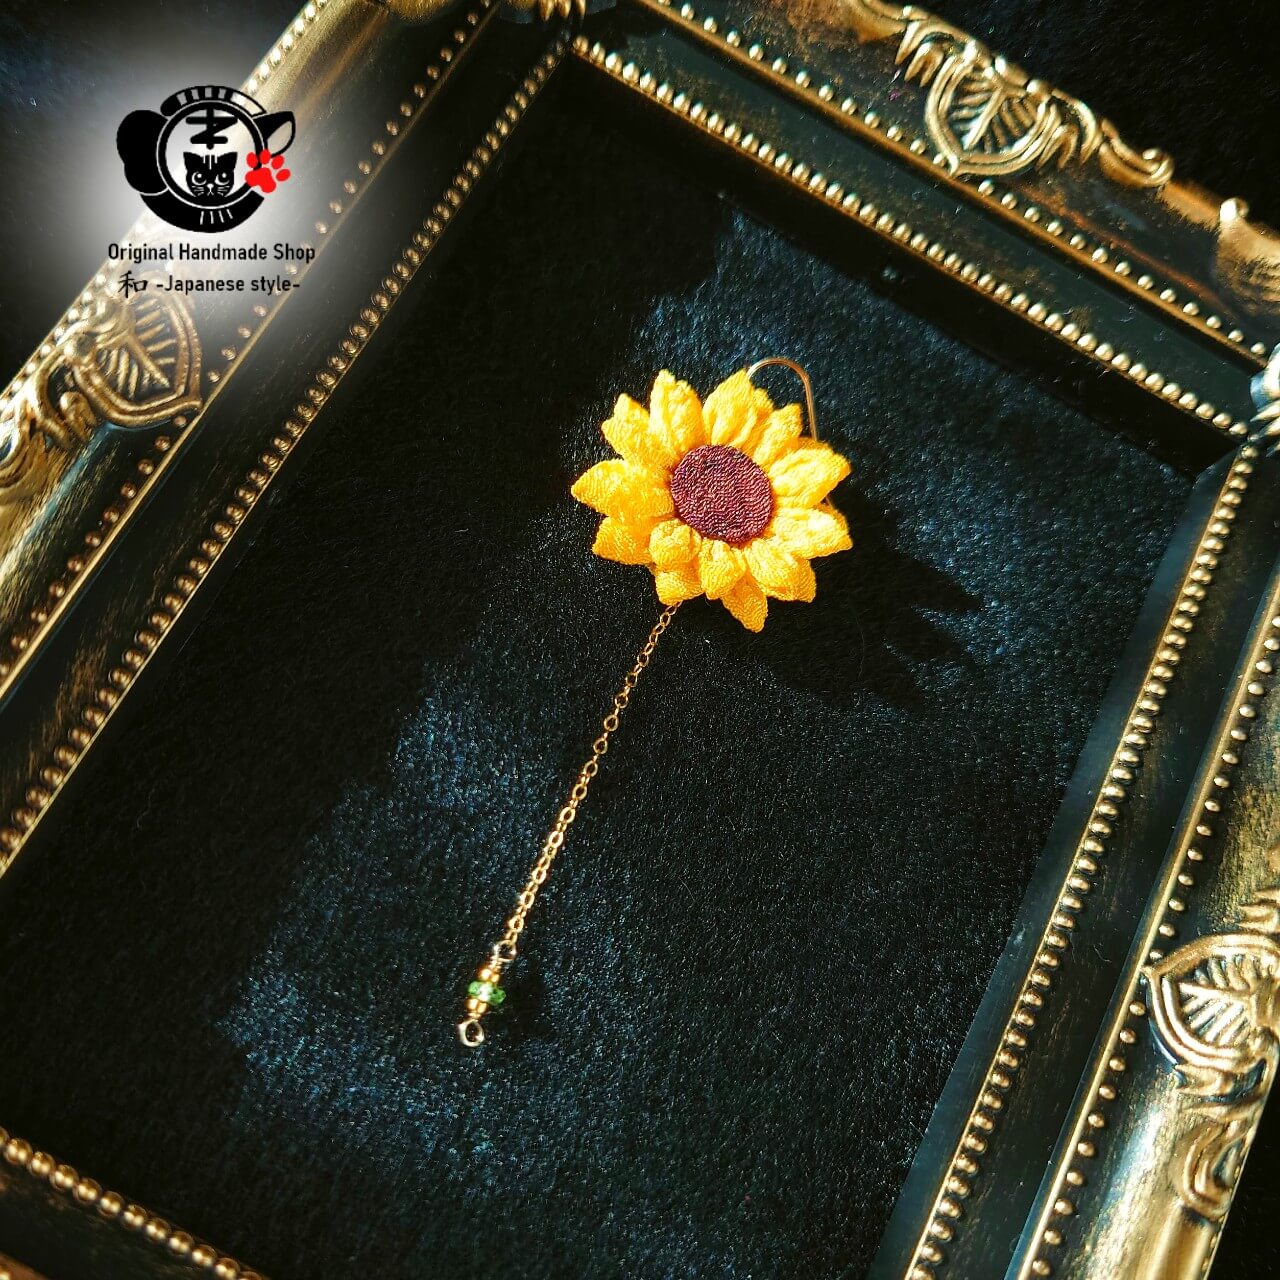 [Birthday Flower Of August][Choice of birthstones] Sunflower And Birthstone Earrings【8月誕生花】【選べる誕生石】向日葵と誕生石のピアス